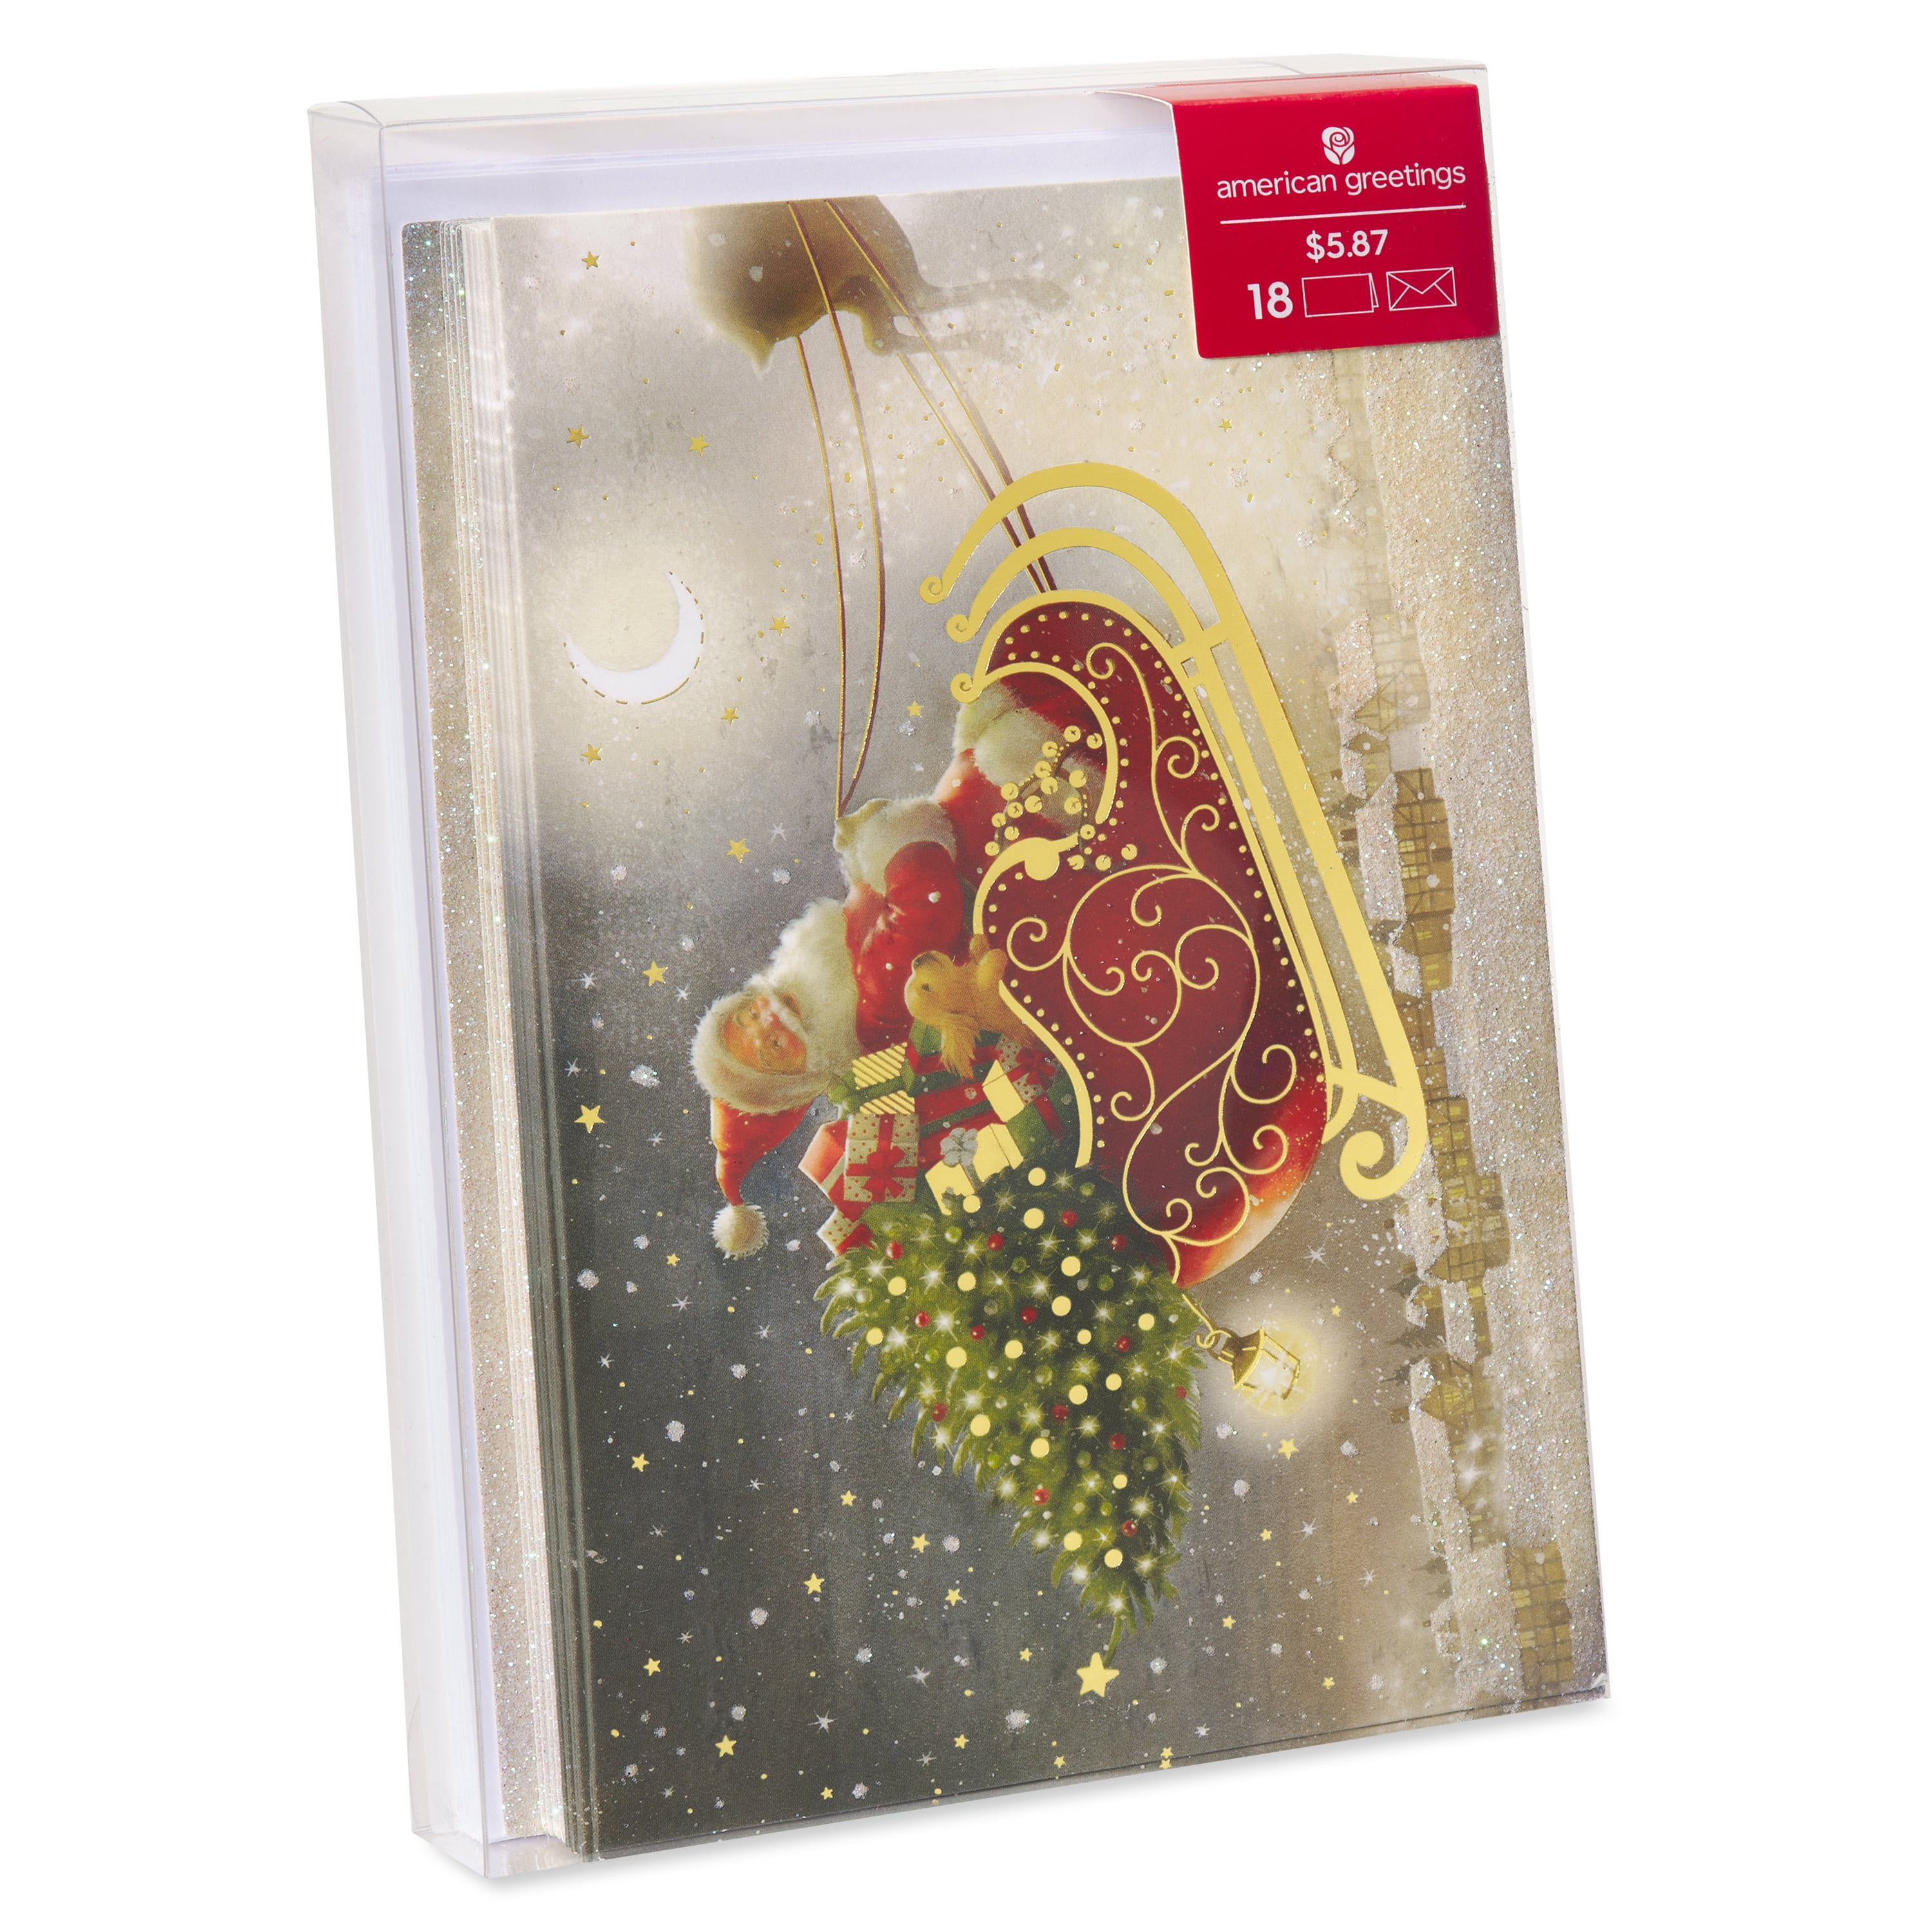 American Greetings Christmas Boxed Cards Sleigh (Magical Season) 18-count